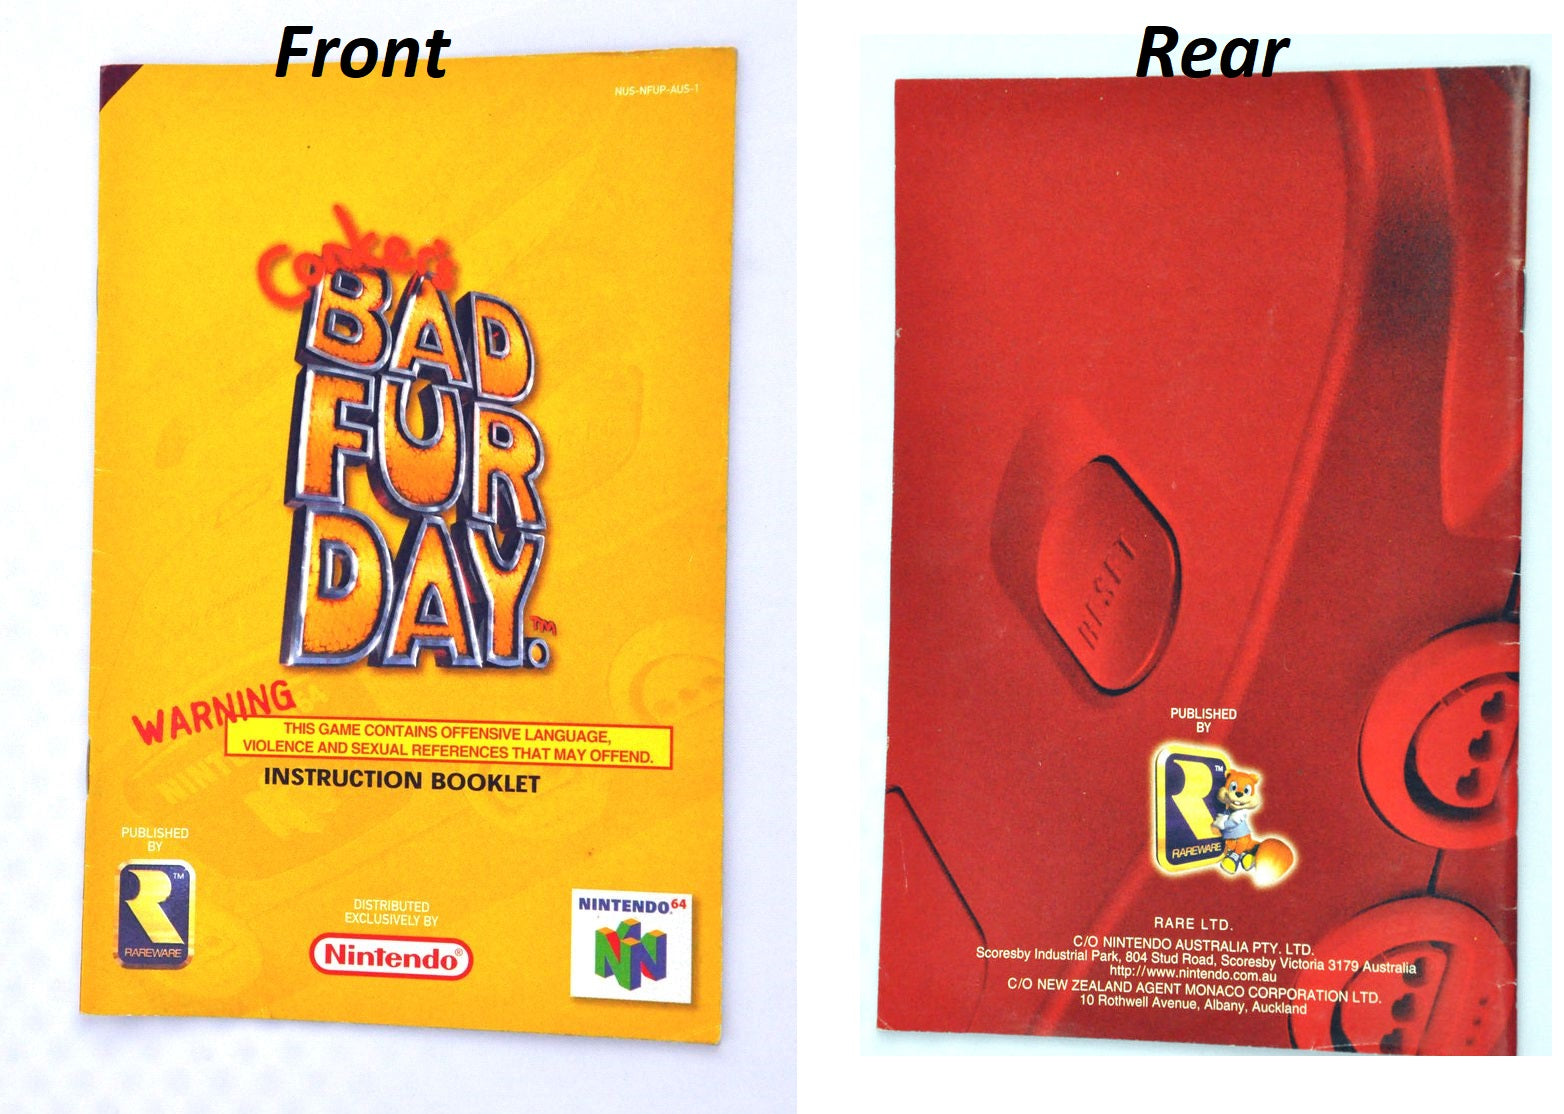 Manual | Nintendo N64 | Replacement Instruction Manuals Book